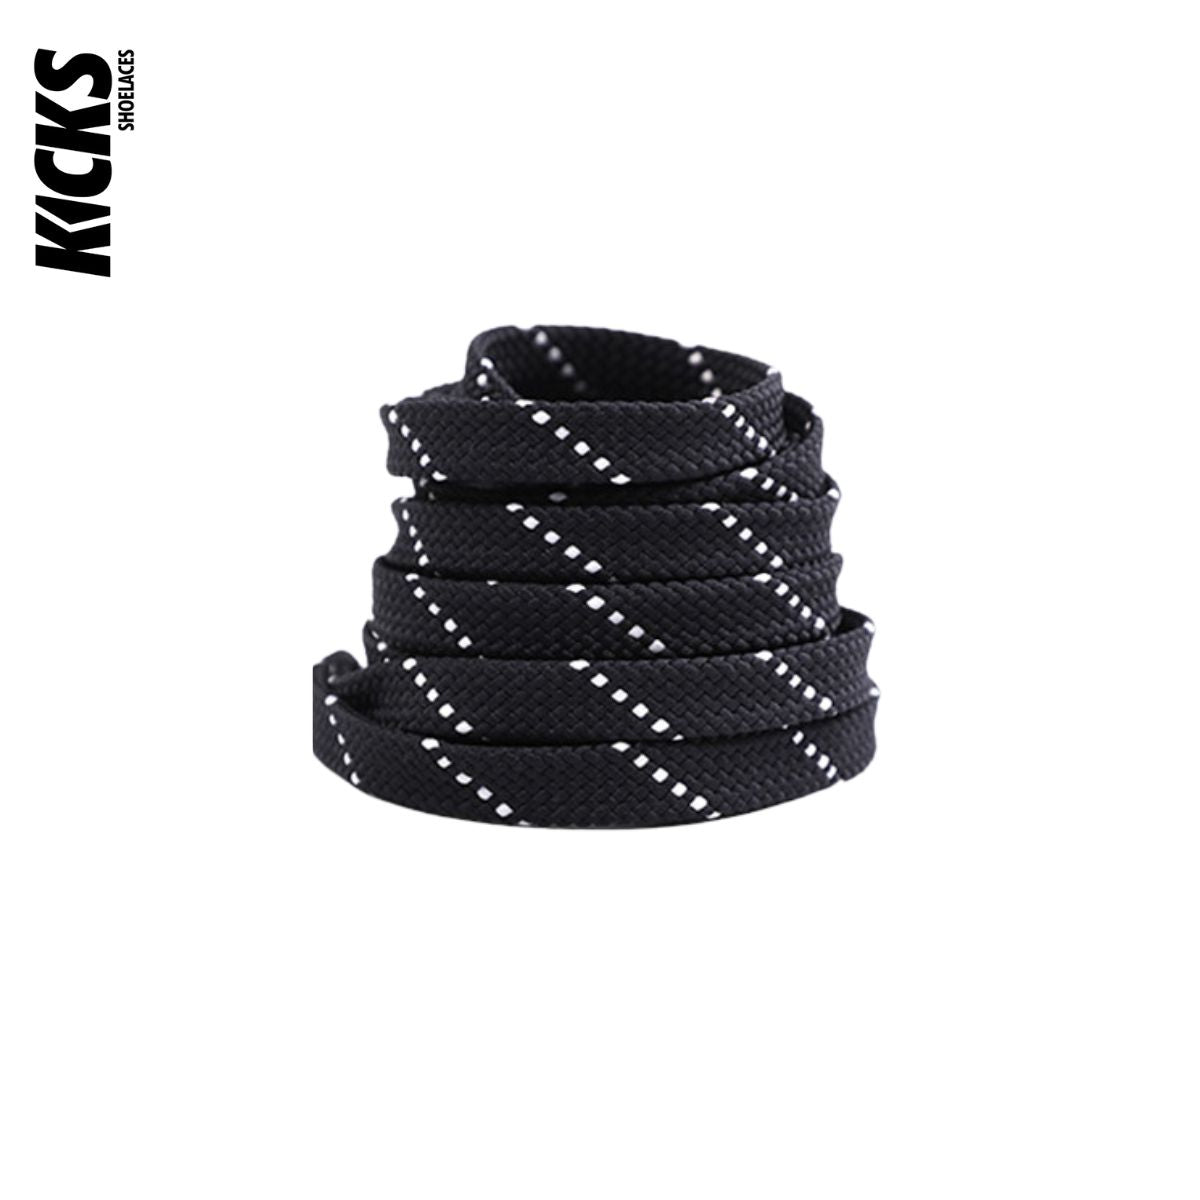 Black-White-Dot-Patterned-Shoelaces